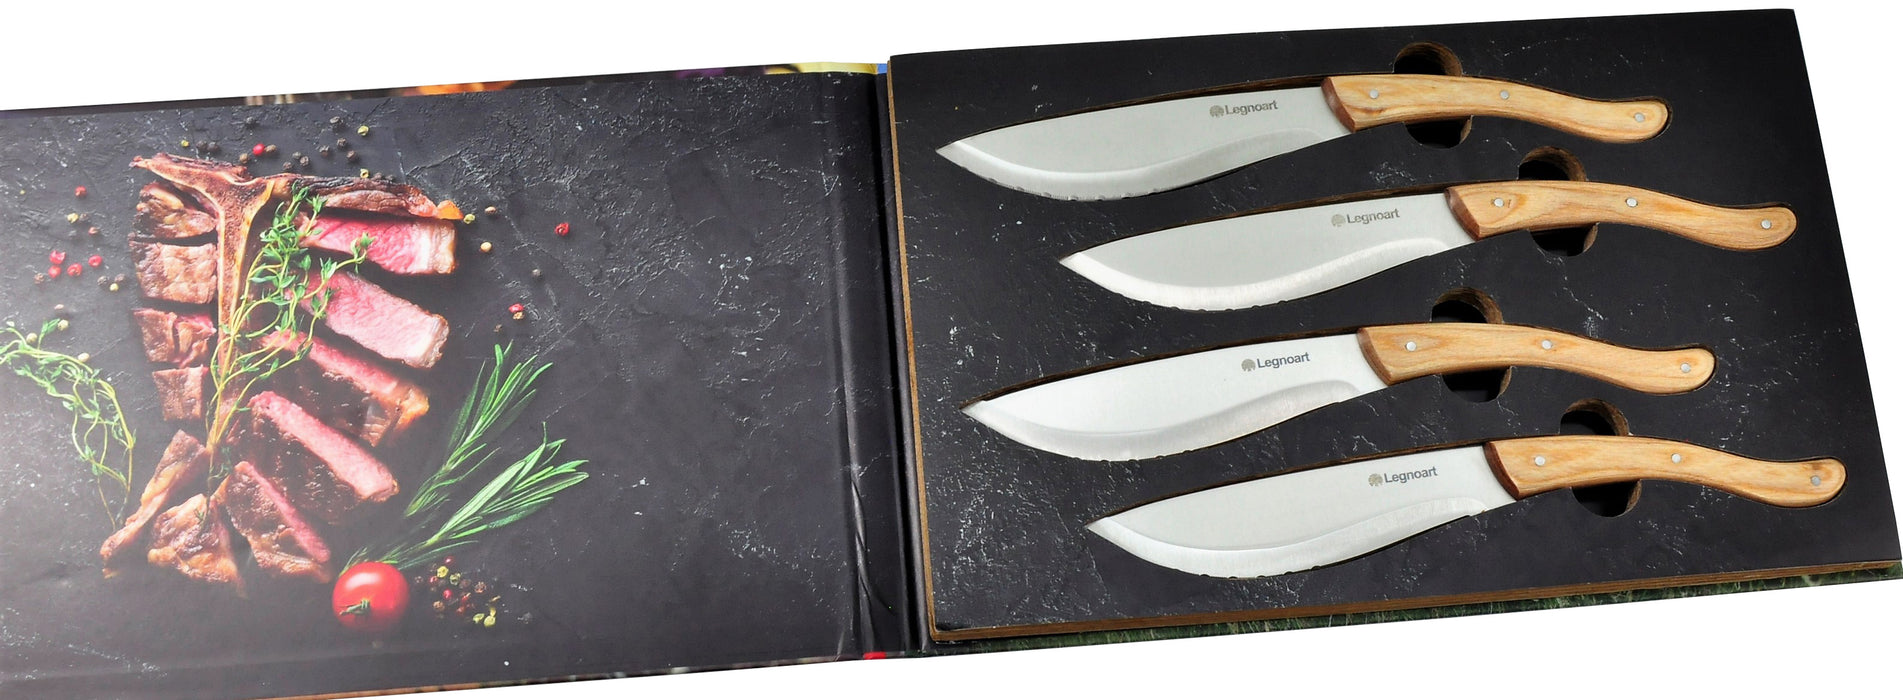 Legnoart Tomahawk 4-Piece Steak Knife Set with Light Wood Handle